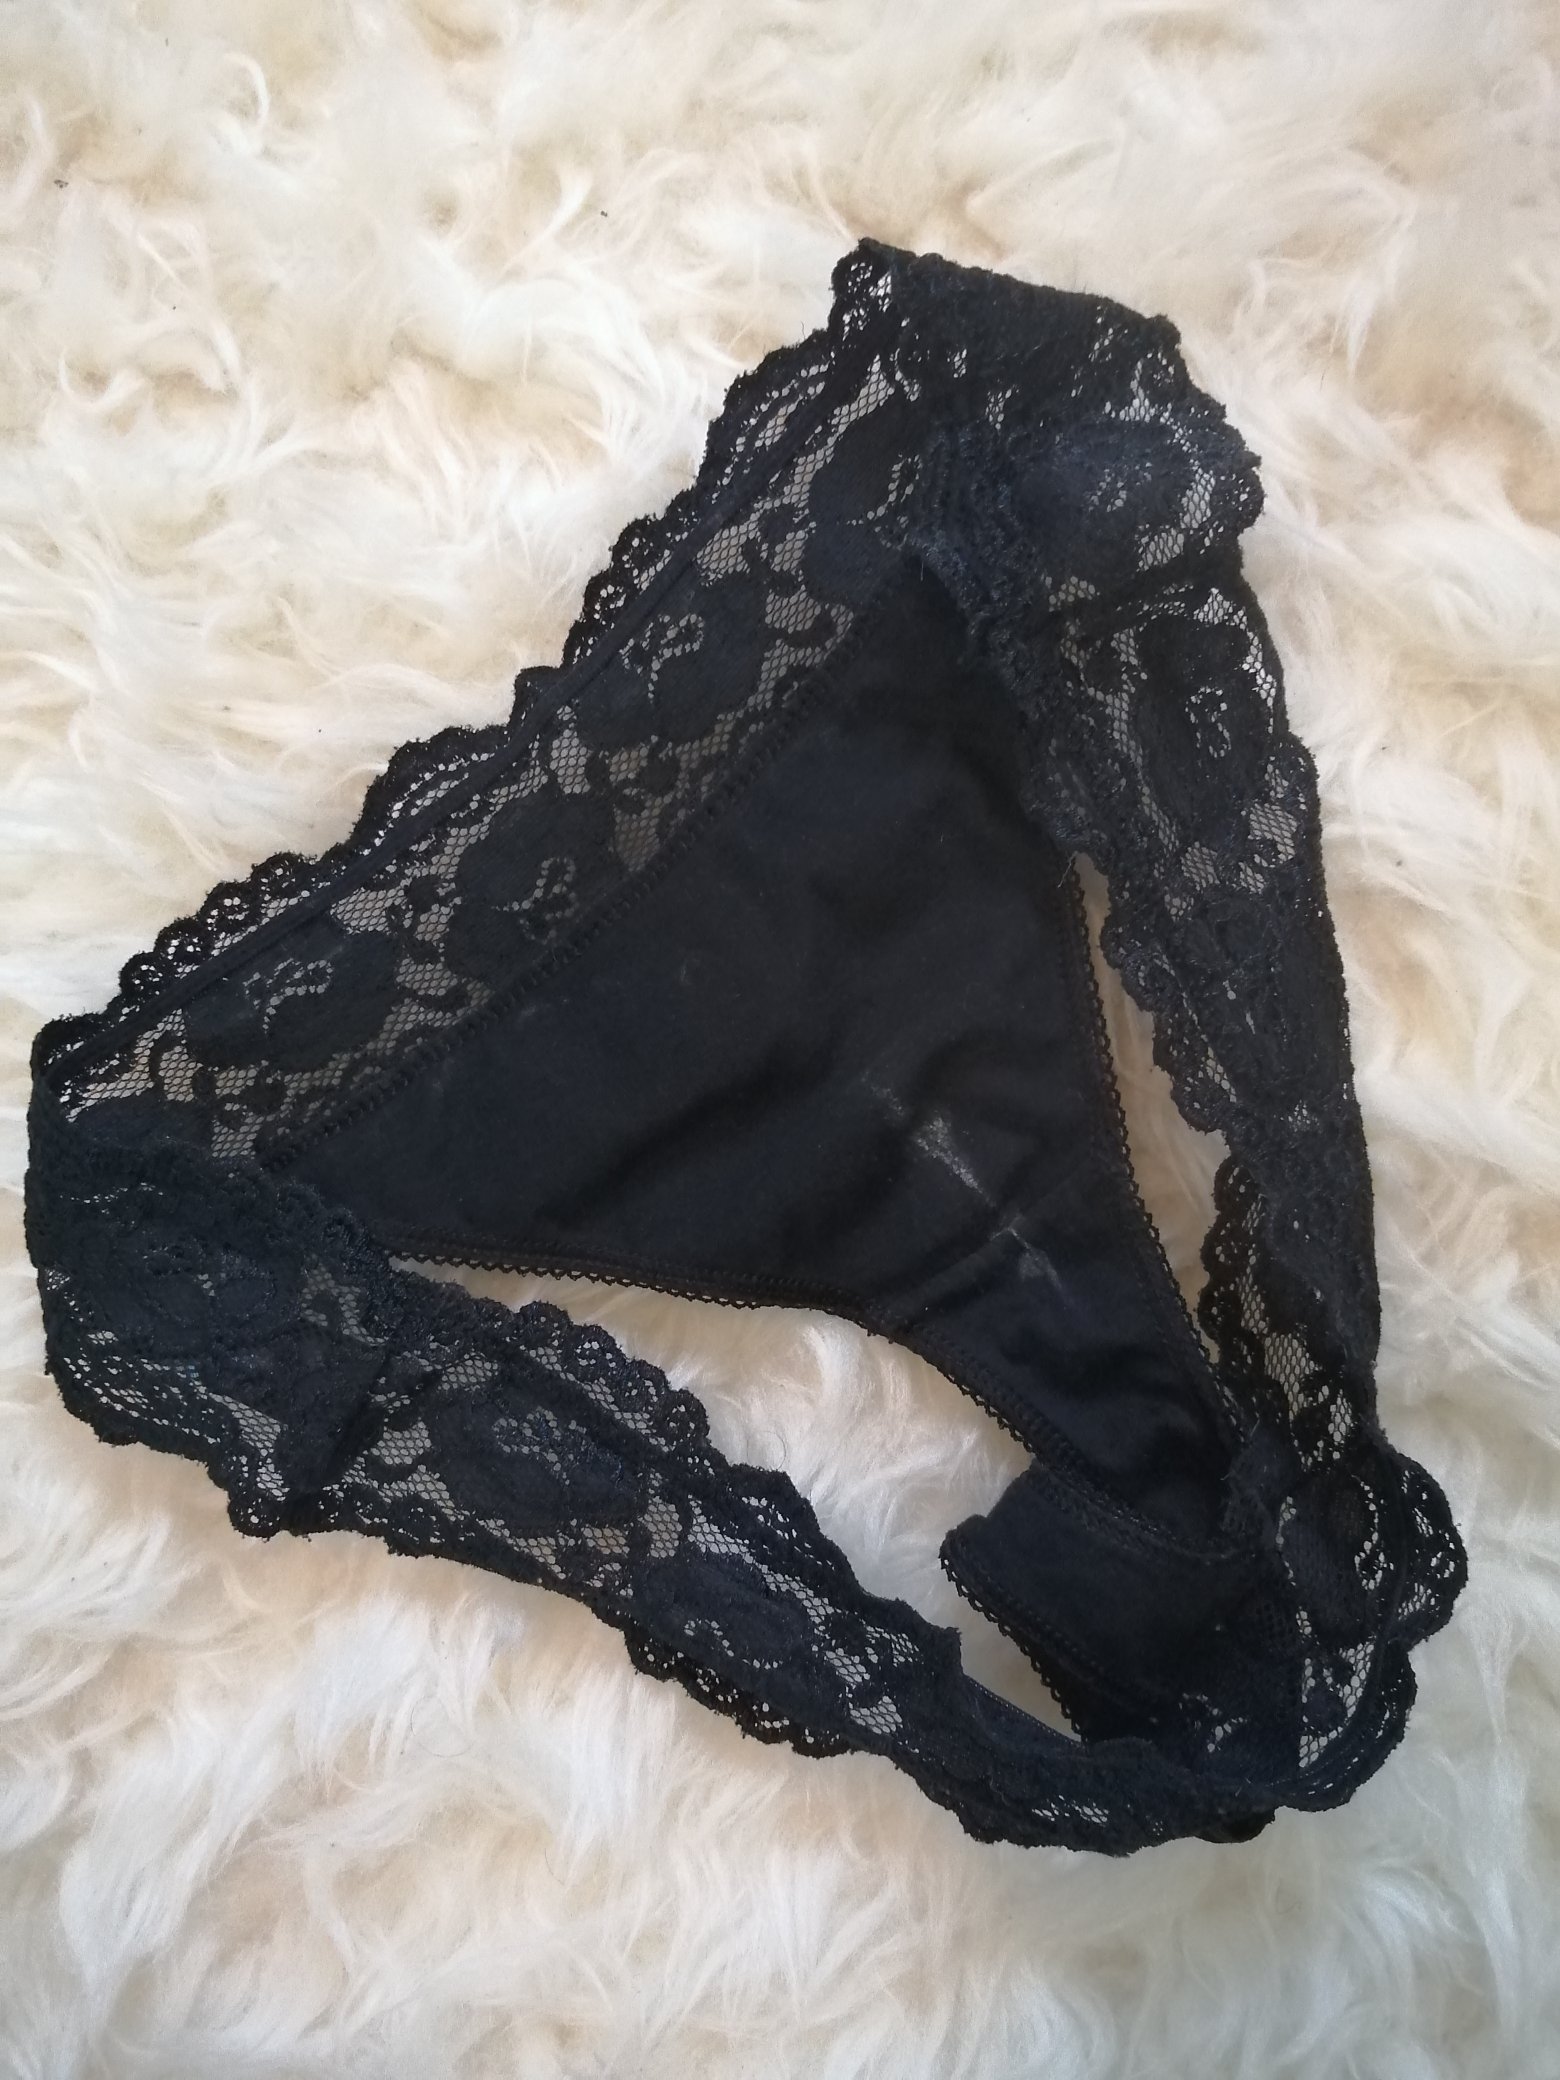 QueenoftheHF on X: Selling used panties, UK 14 Black Lace Thong